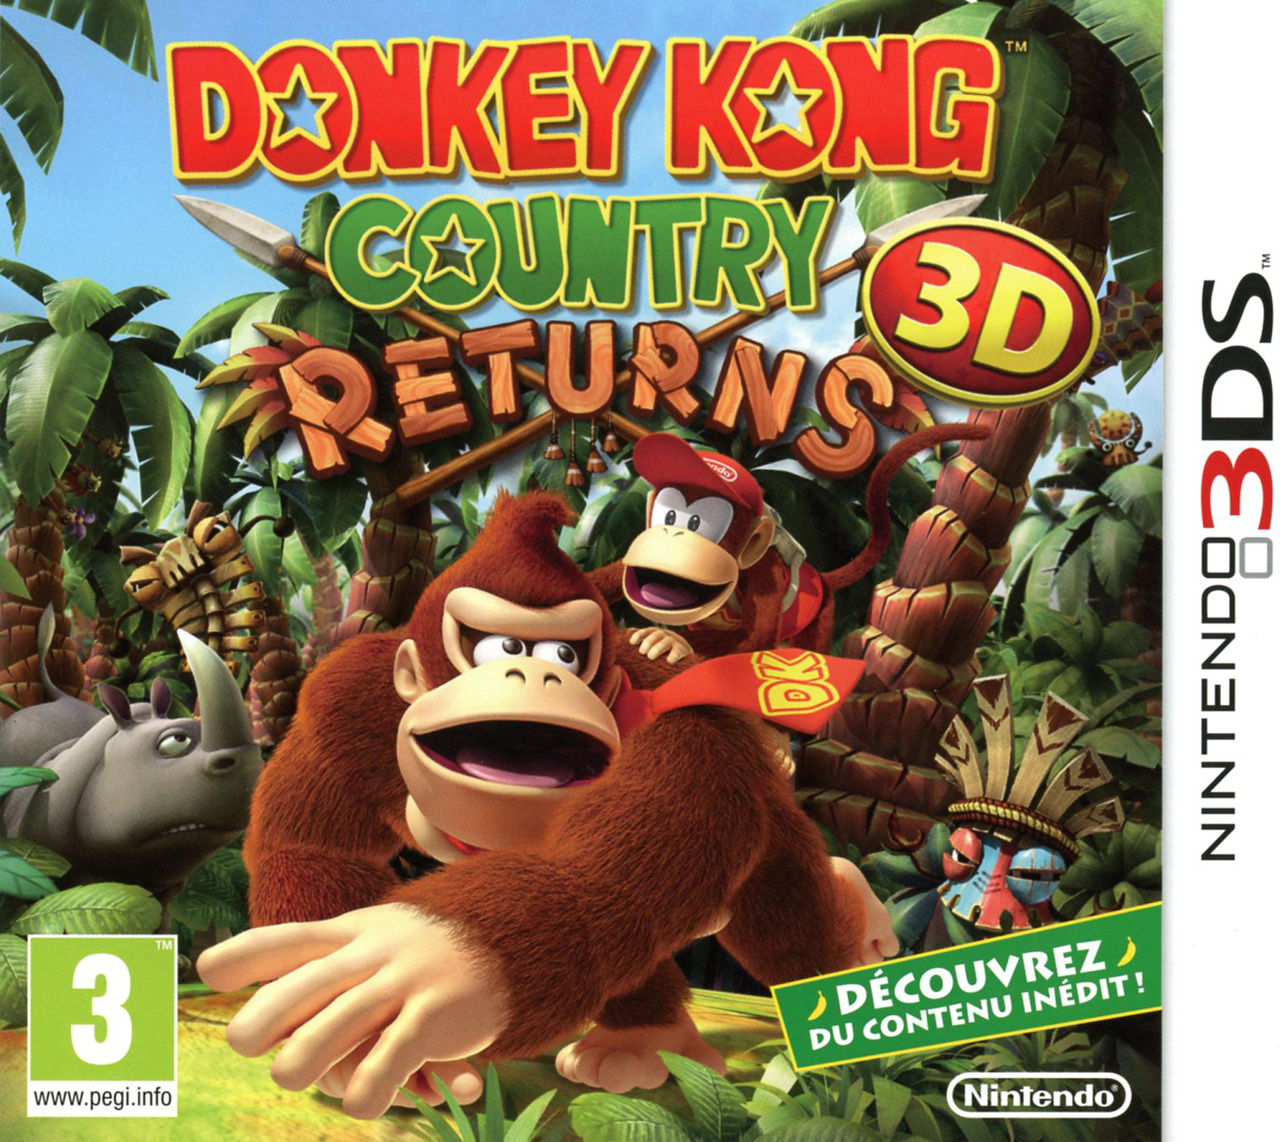 jaquette du jeu vidéo Donkey Kong Country Returns